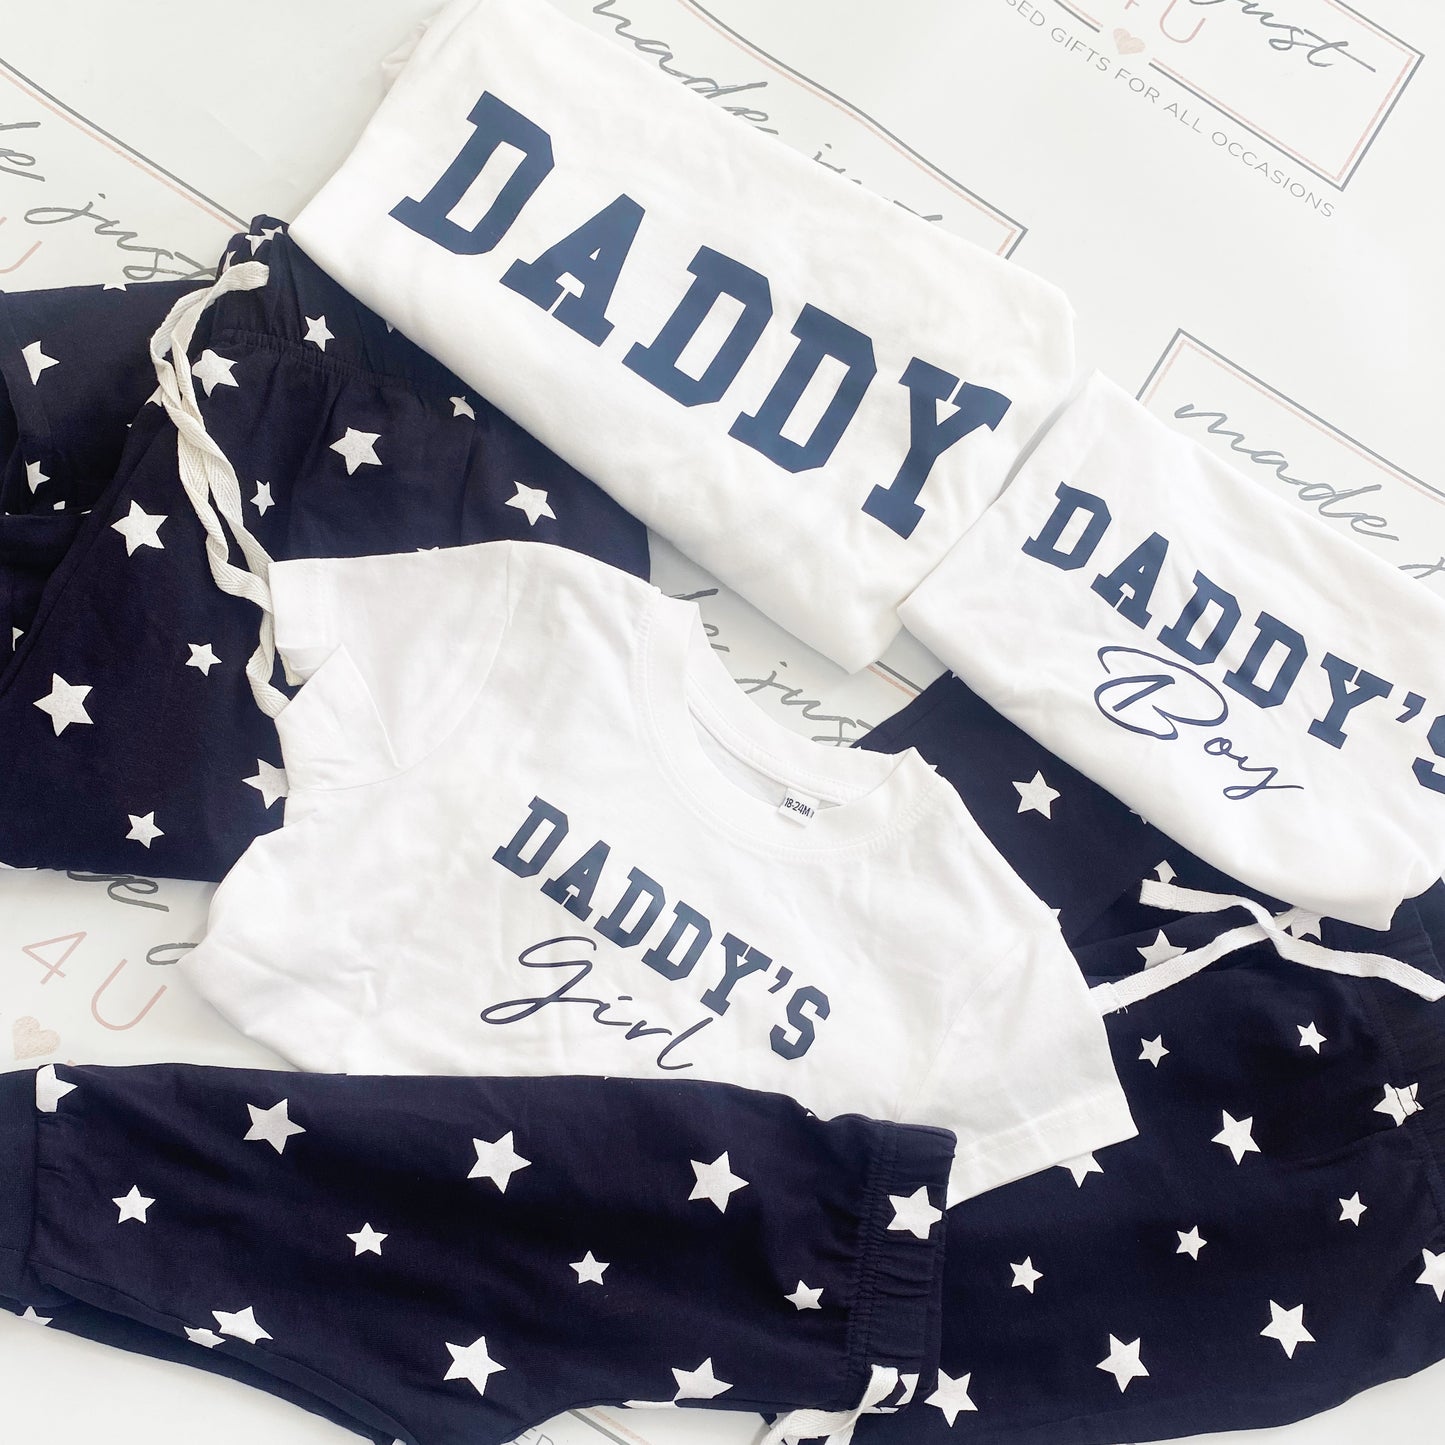 Daddy, Daughter & Son Pyjamas,| Daddy matching pjs, Personalised Family Pyjamas ALL SIZES | Sleepover Goals matching pjs Daddy Daughter pjs